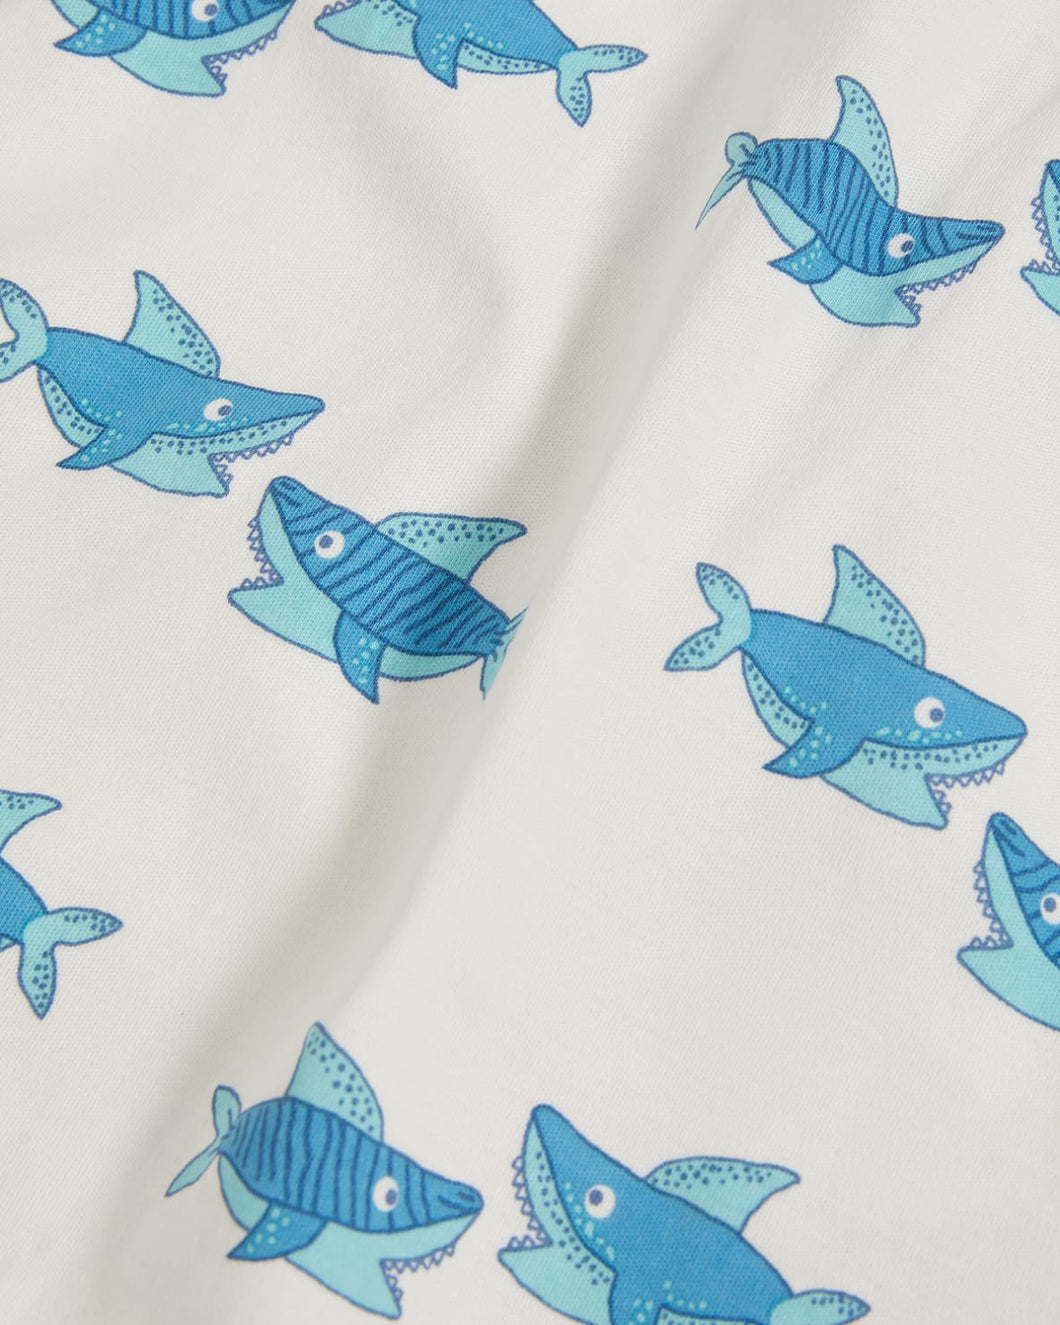 Cool Sharks Blanket